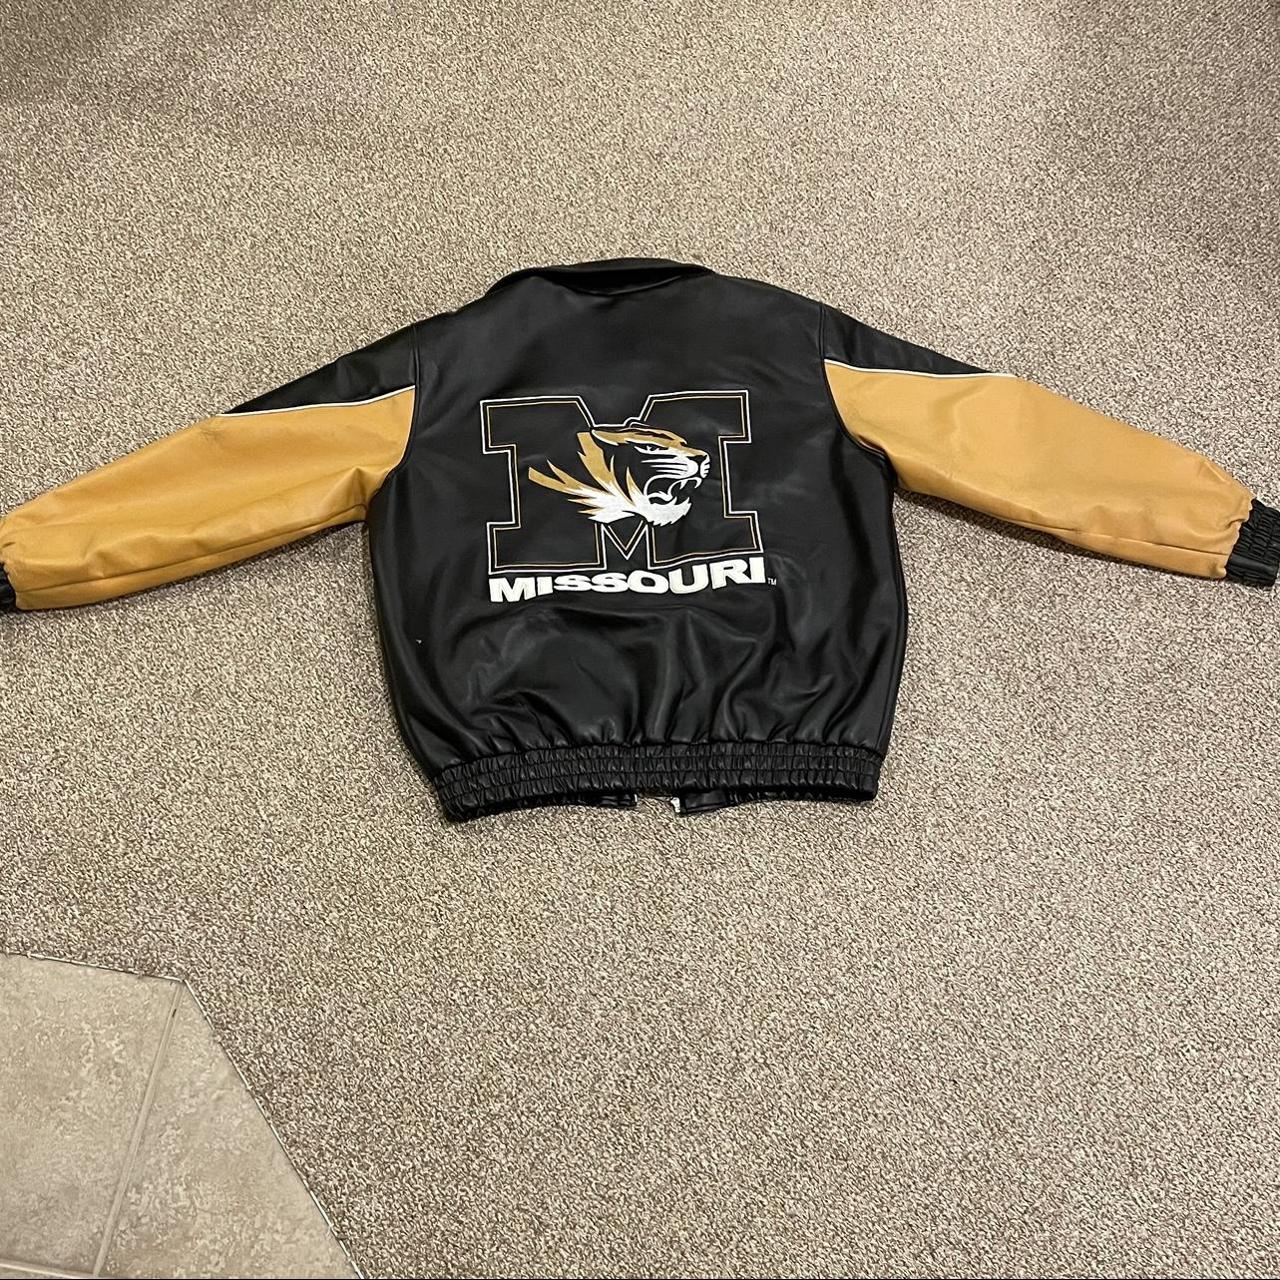 Mizzou Tigers Black/Gold Toddler Varsity Jacket